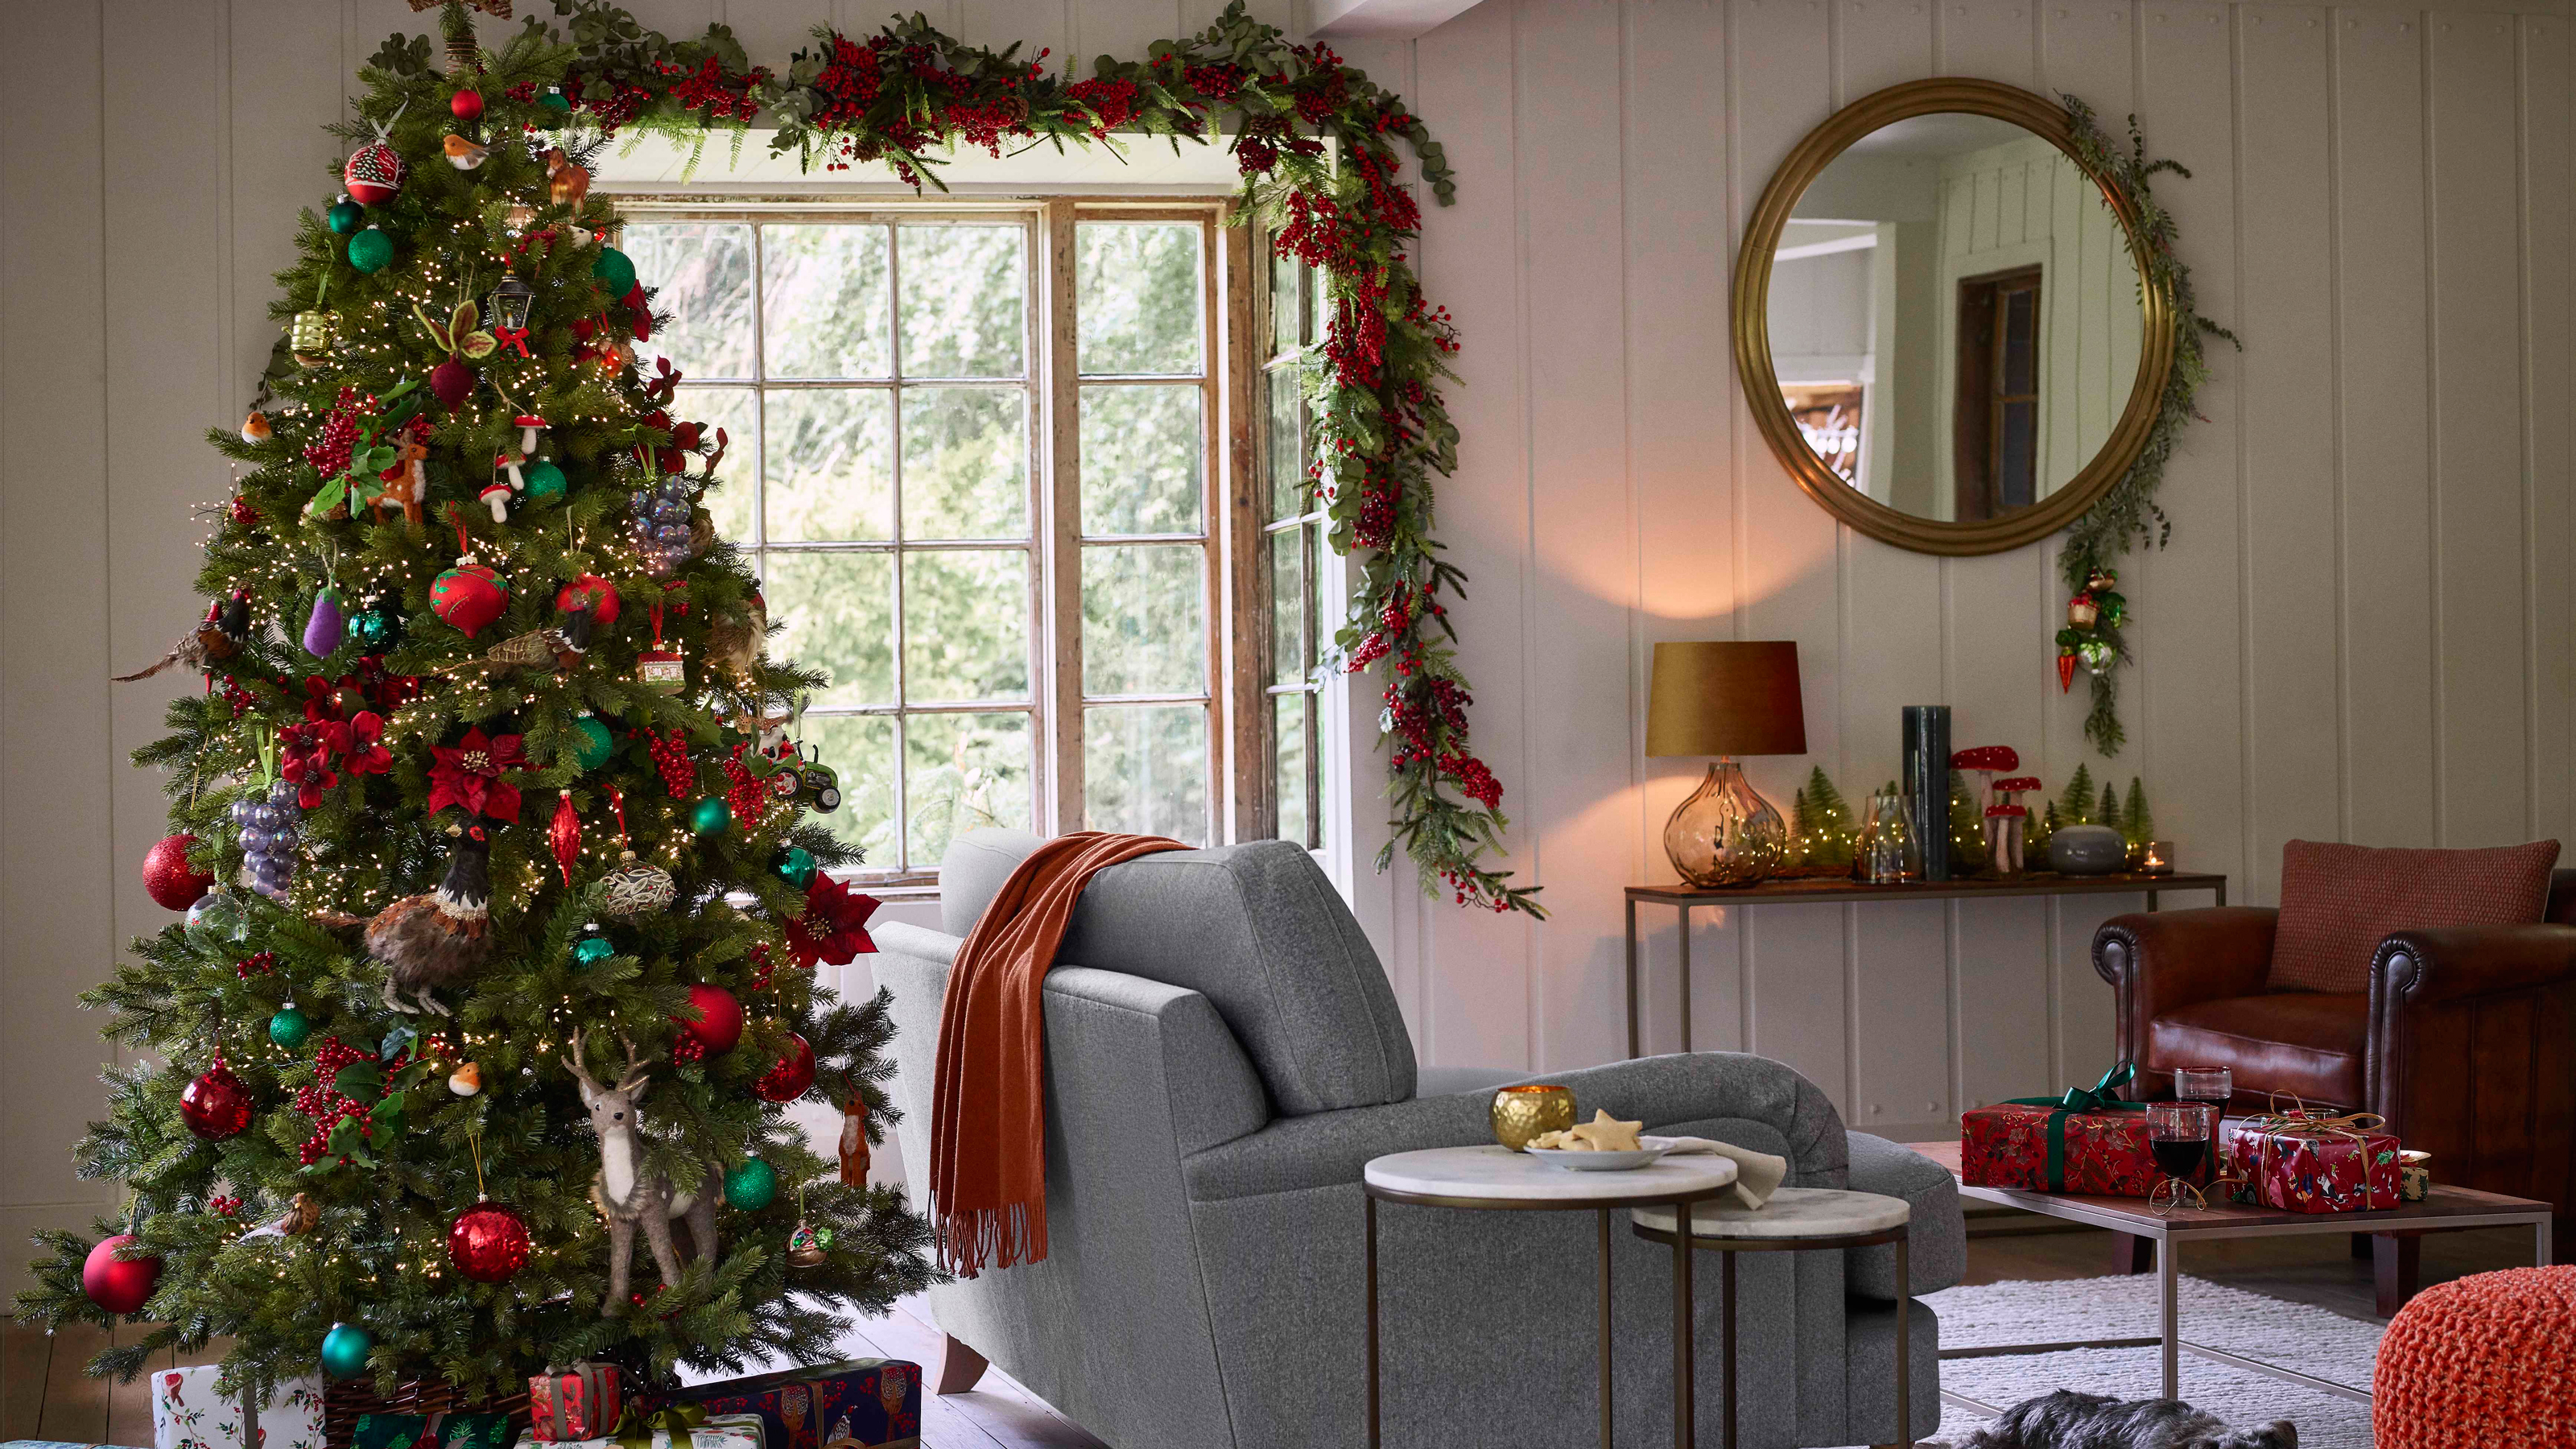 Traditional Christmas decor ideas – 17 classic festive looks